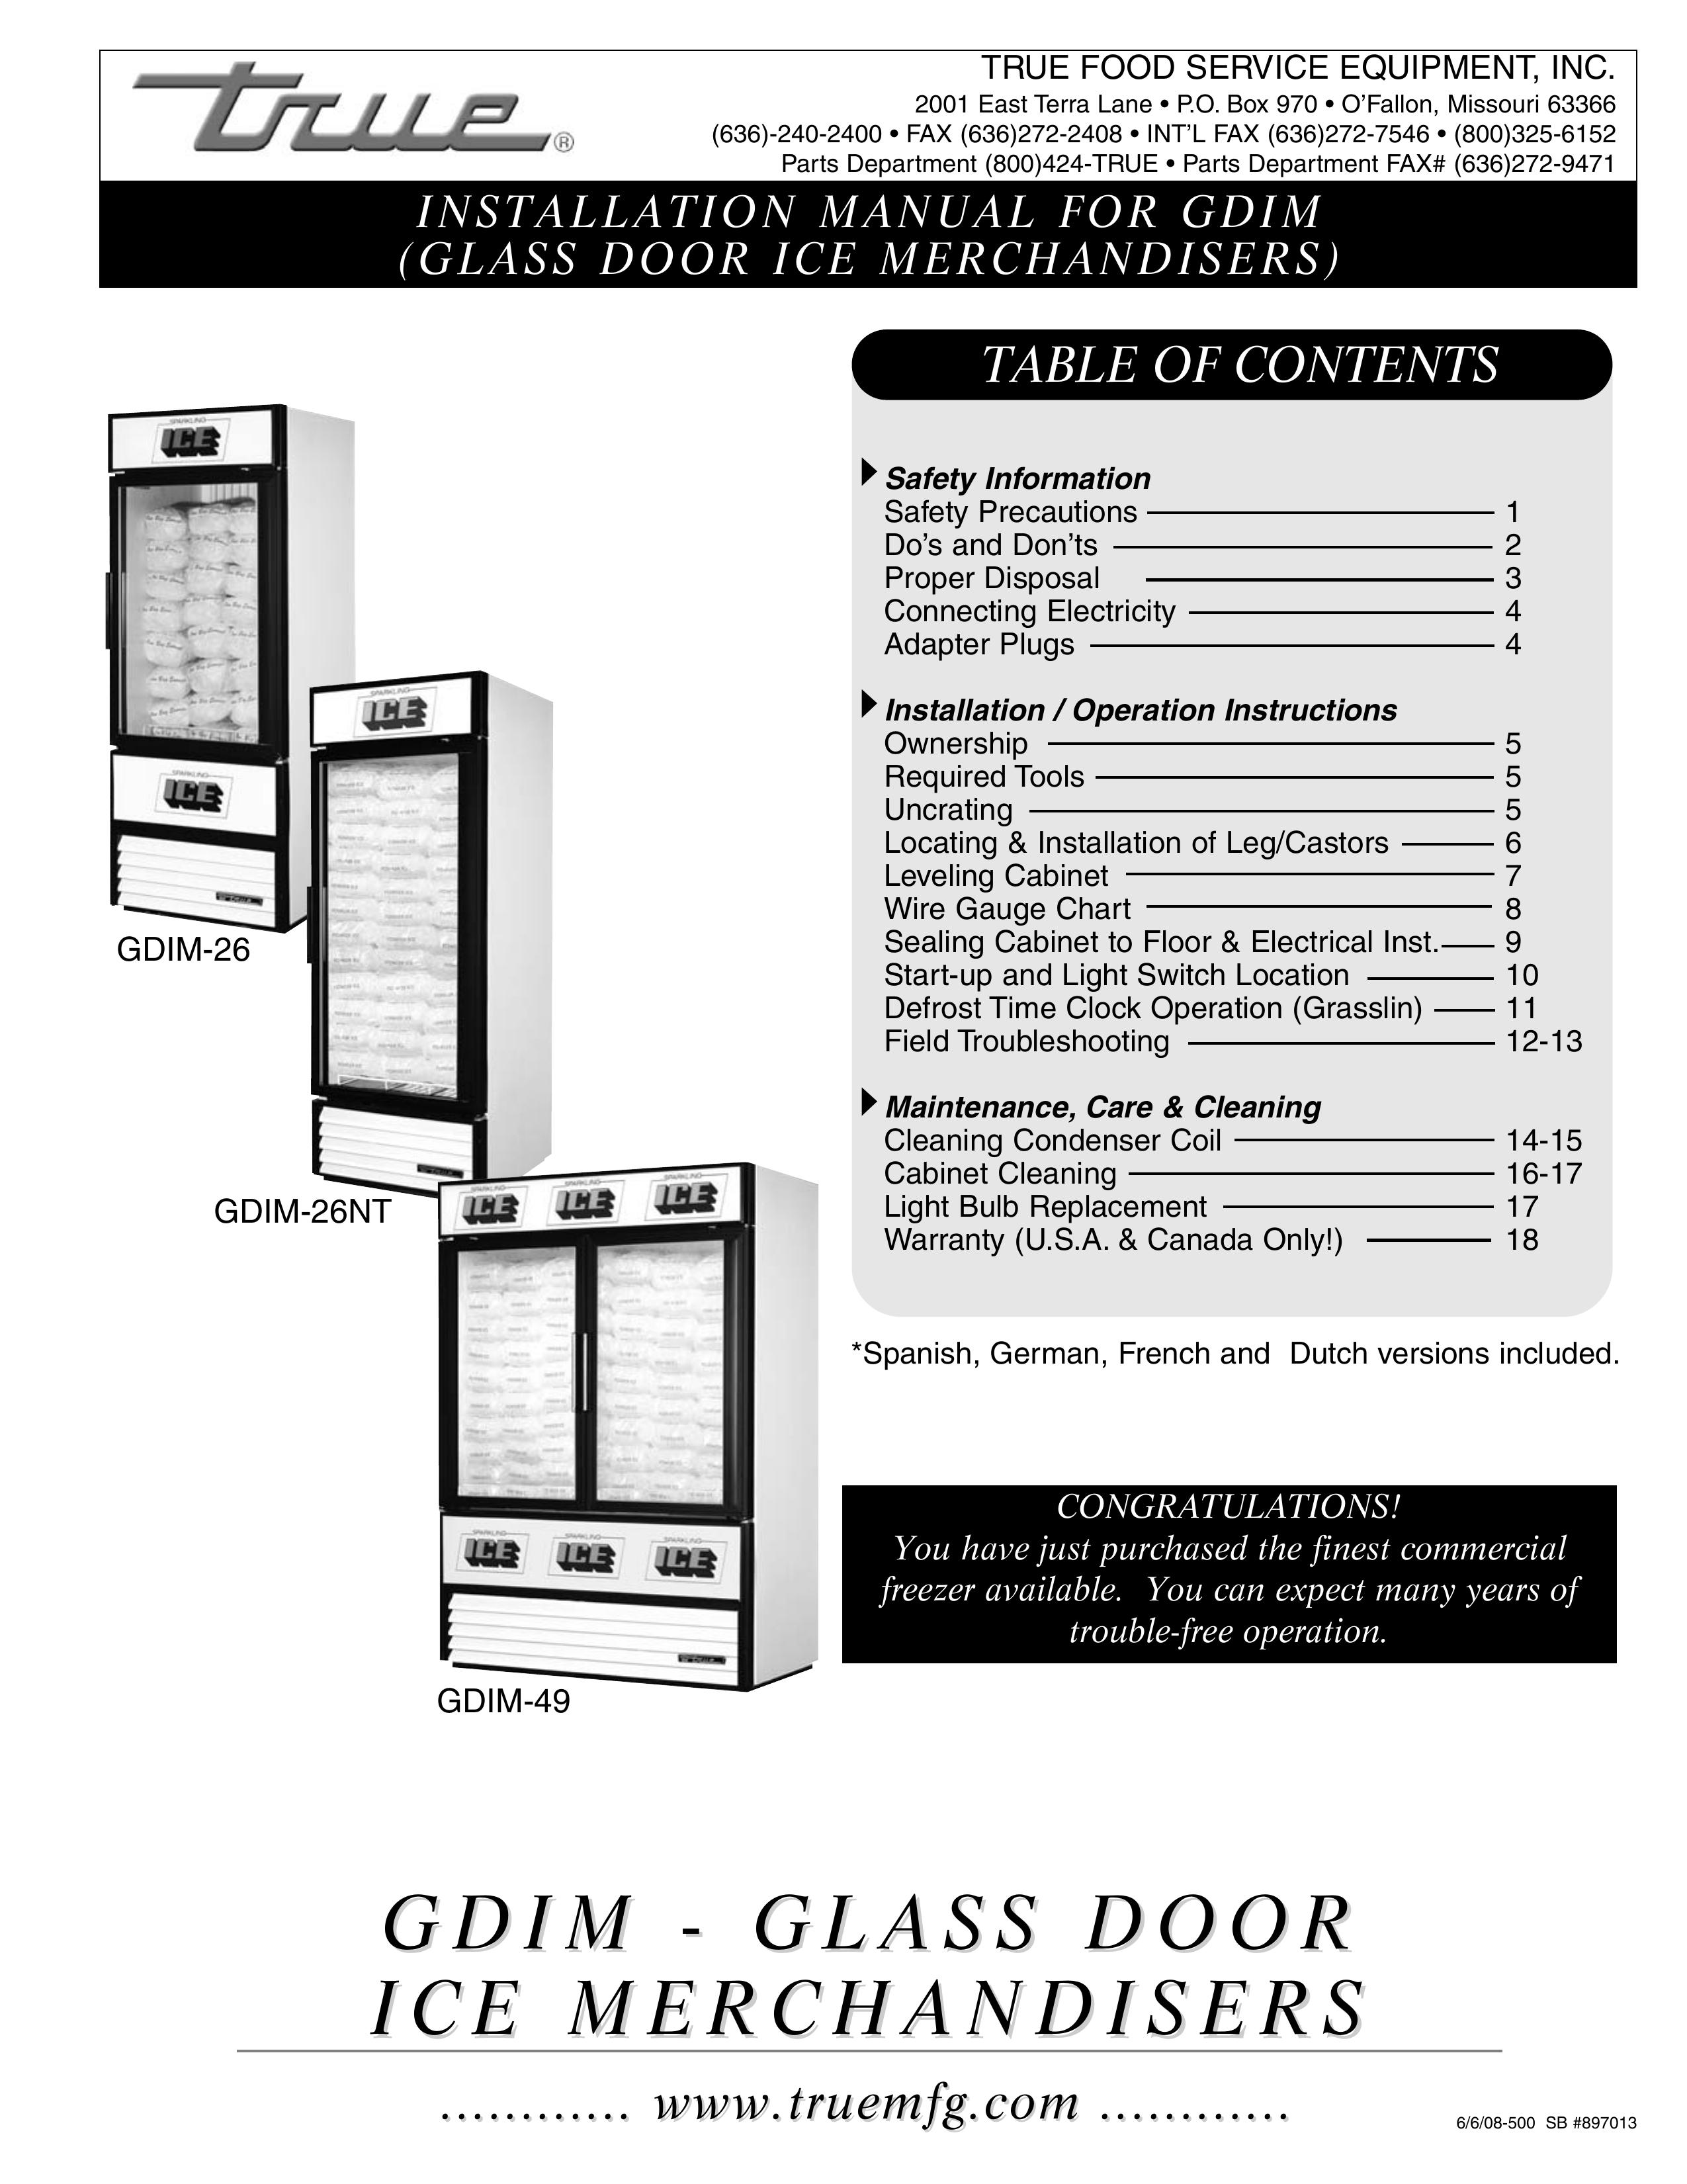 True Manufacturing Company GDIM-49 Refrigerator User Manual